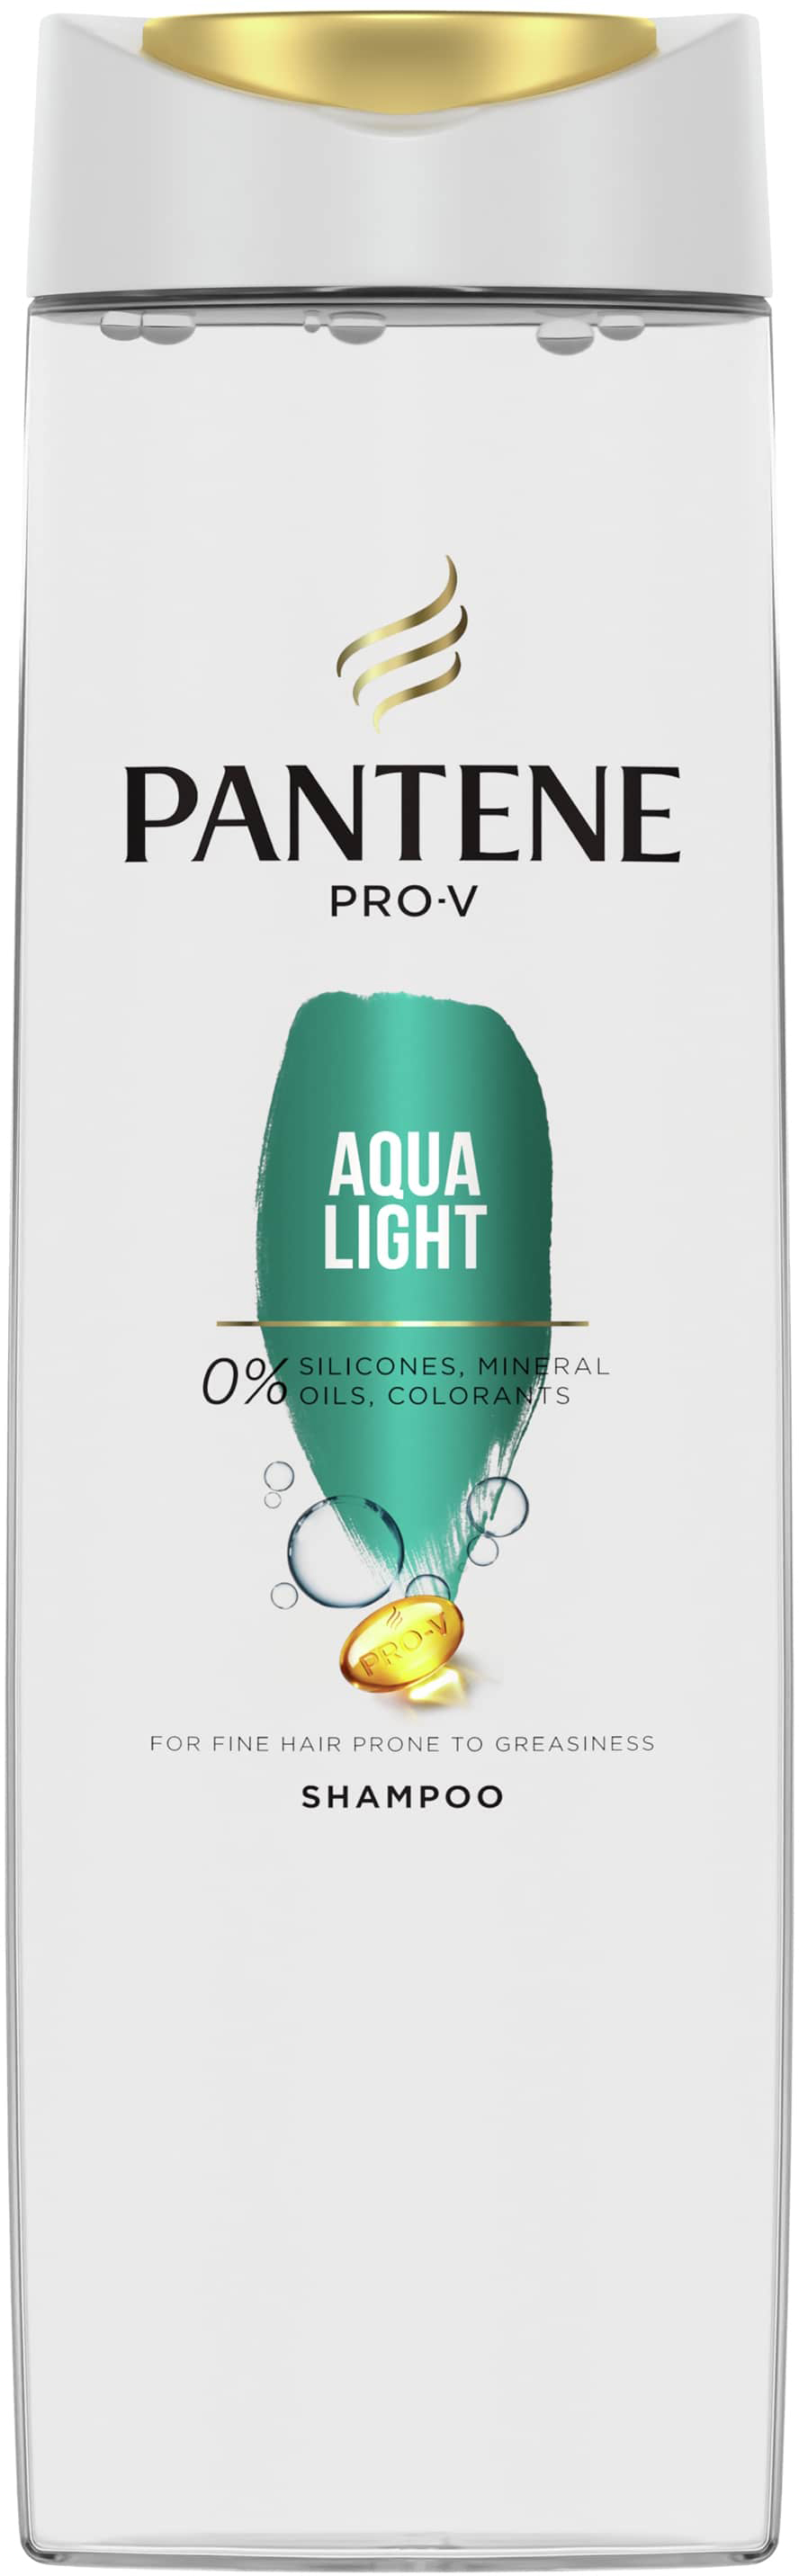 pantene szampon aqua light opinie